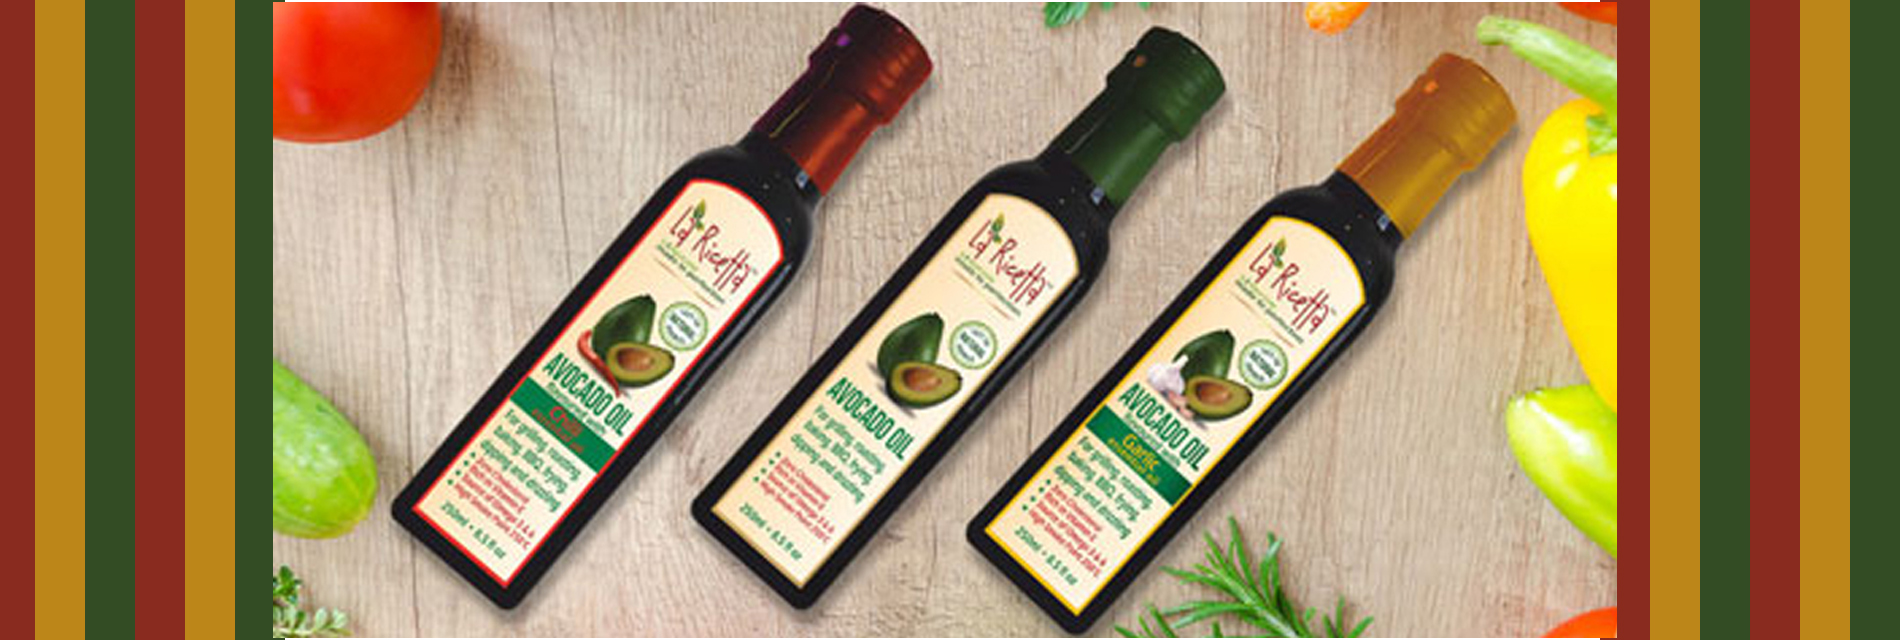 http://www.enaturalltd.com/products/la-ricetta-premium-avocado-oils/